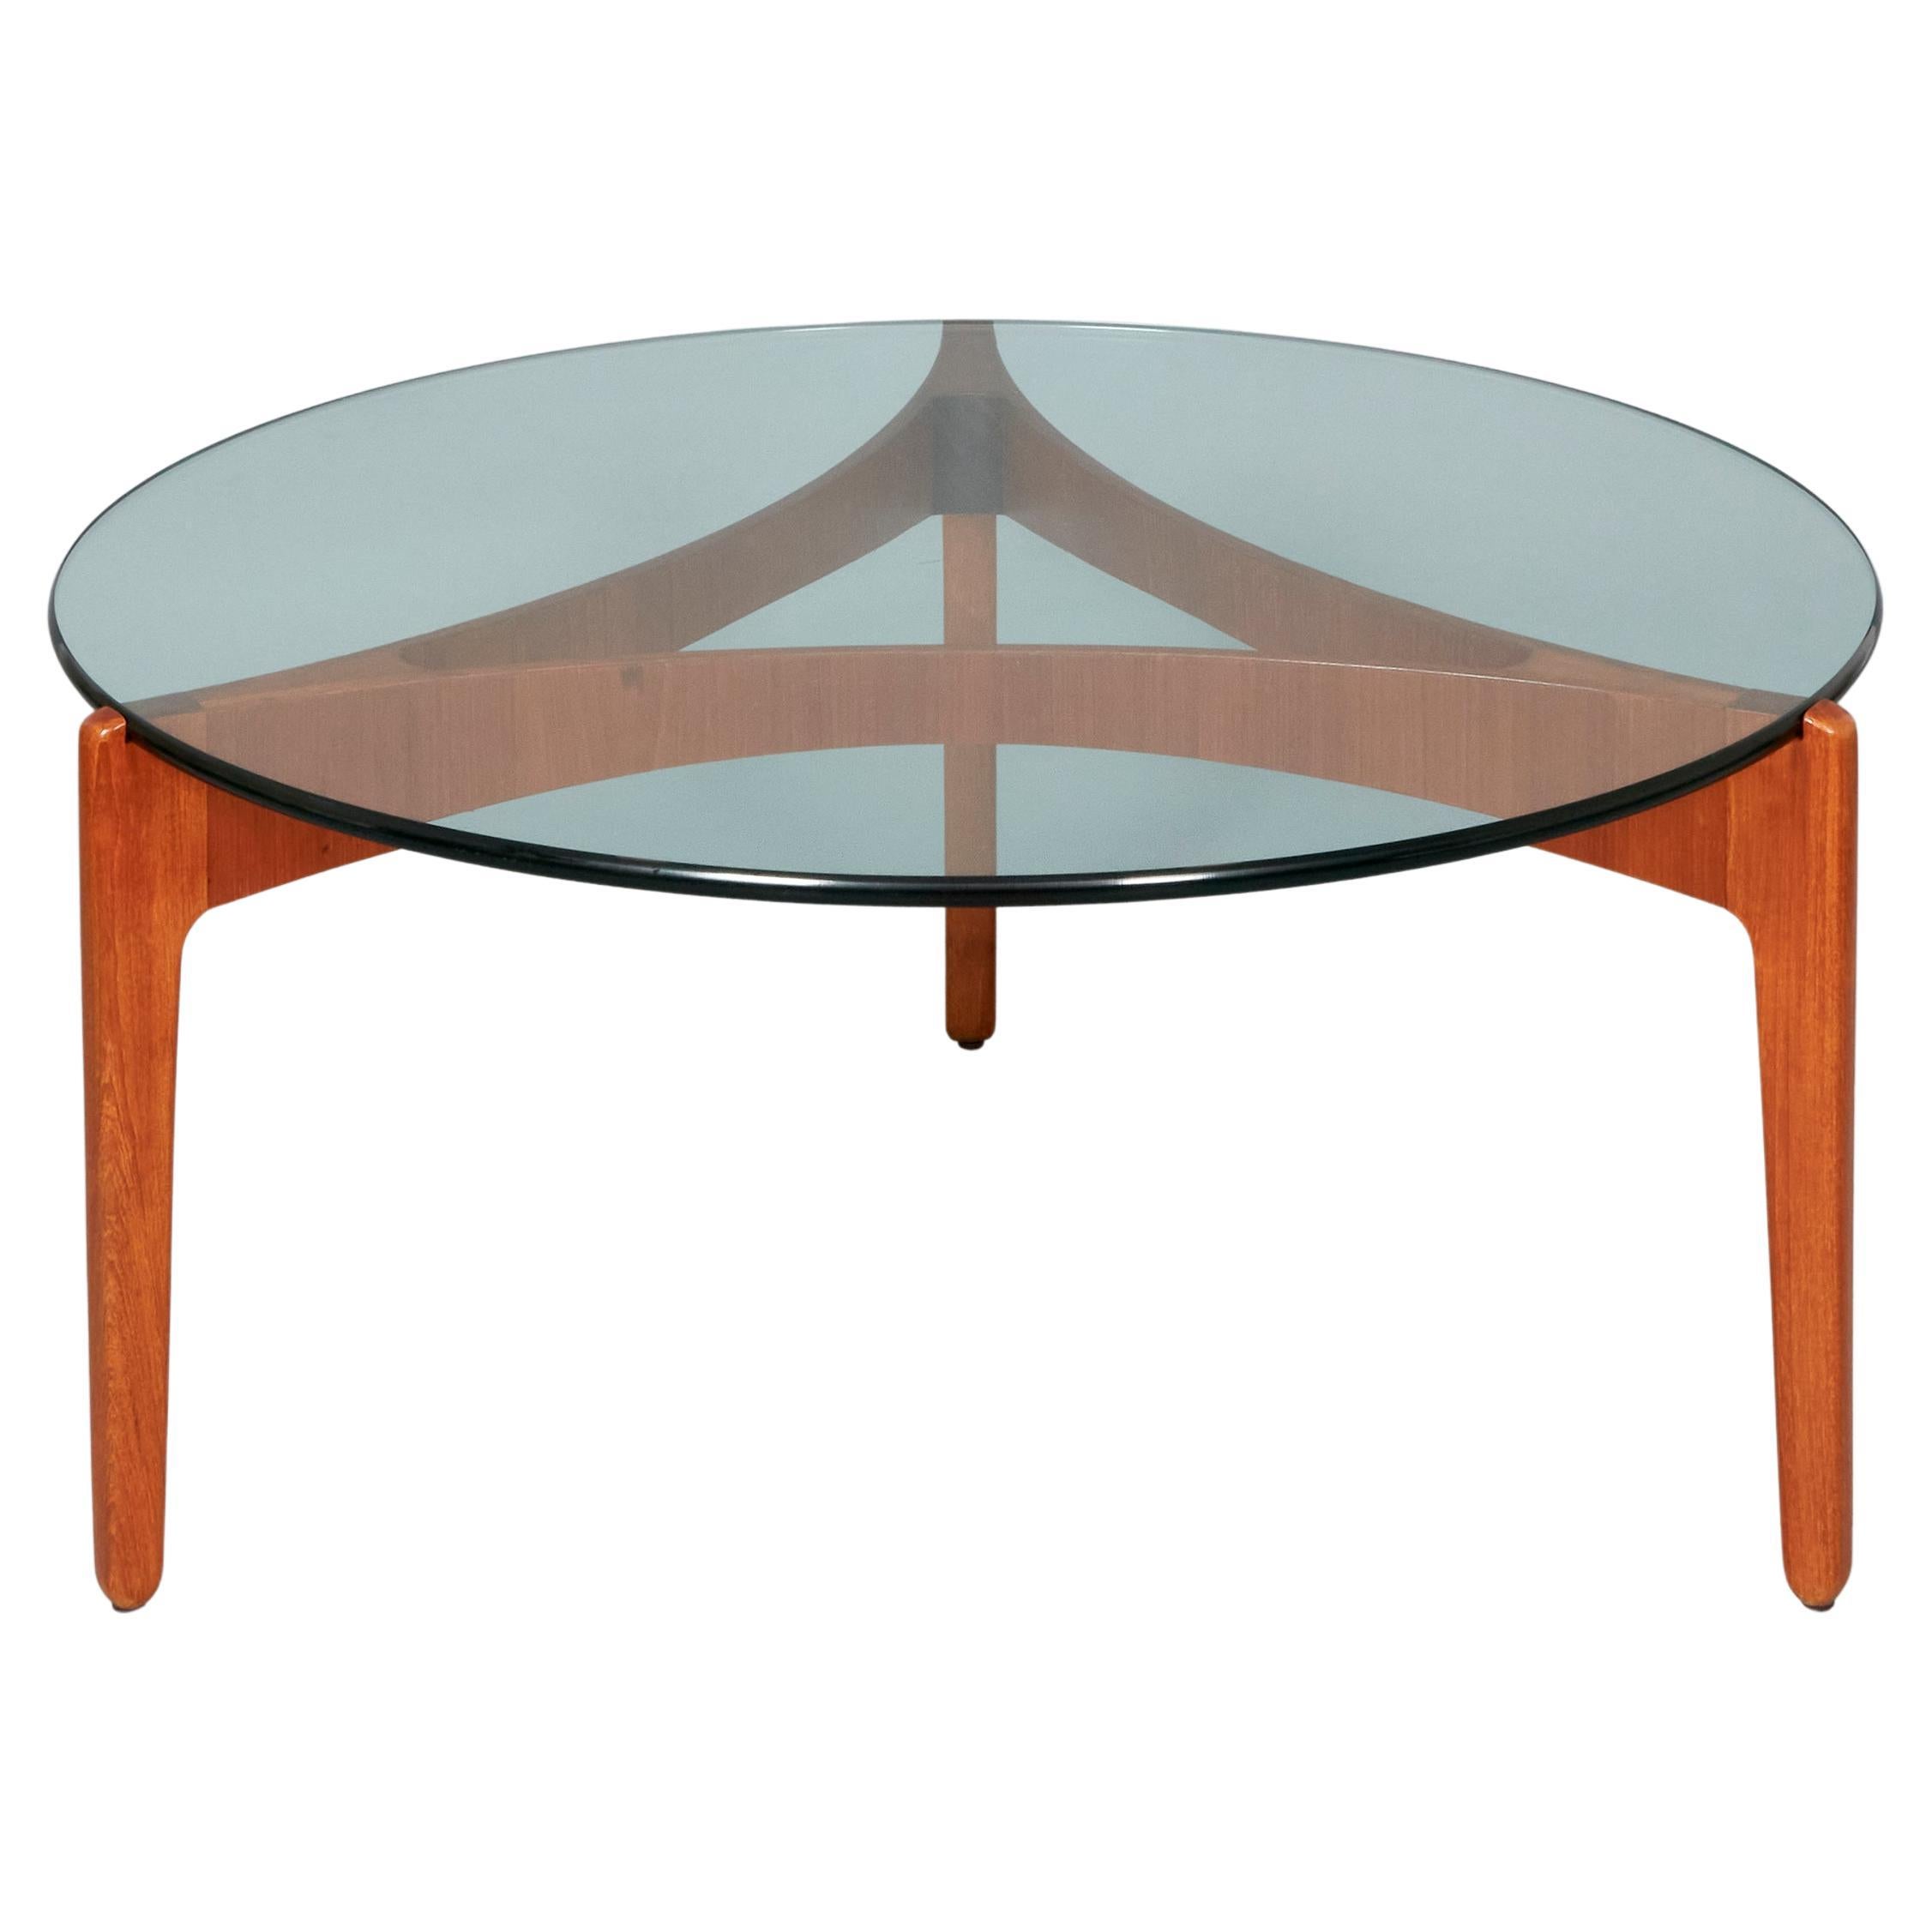 Midcentury Modern Sven Ellekaer Teak and Glass Coffee Table For Sale